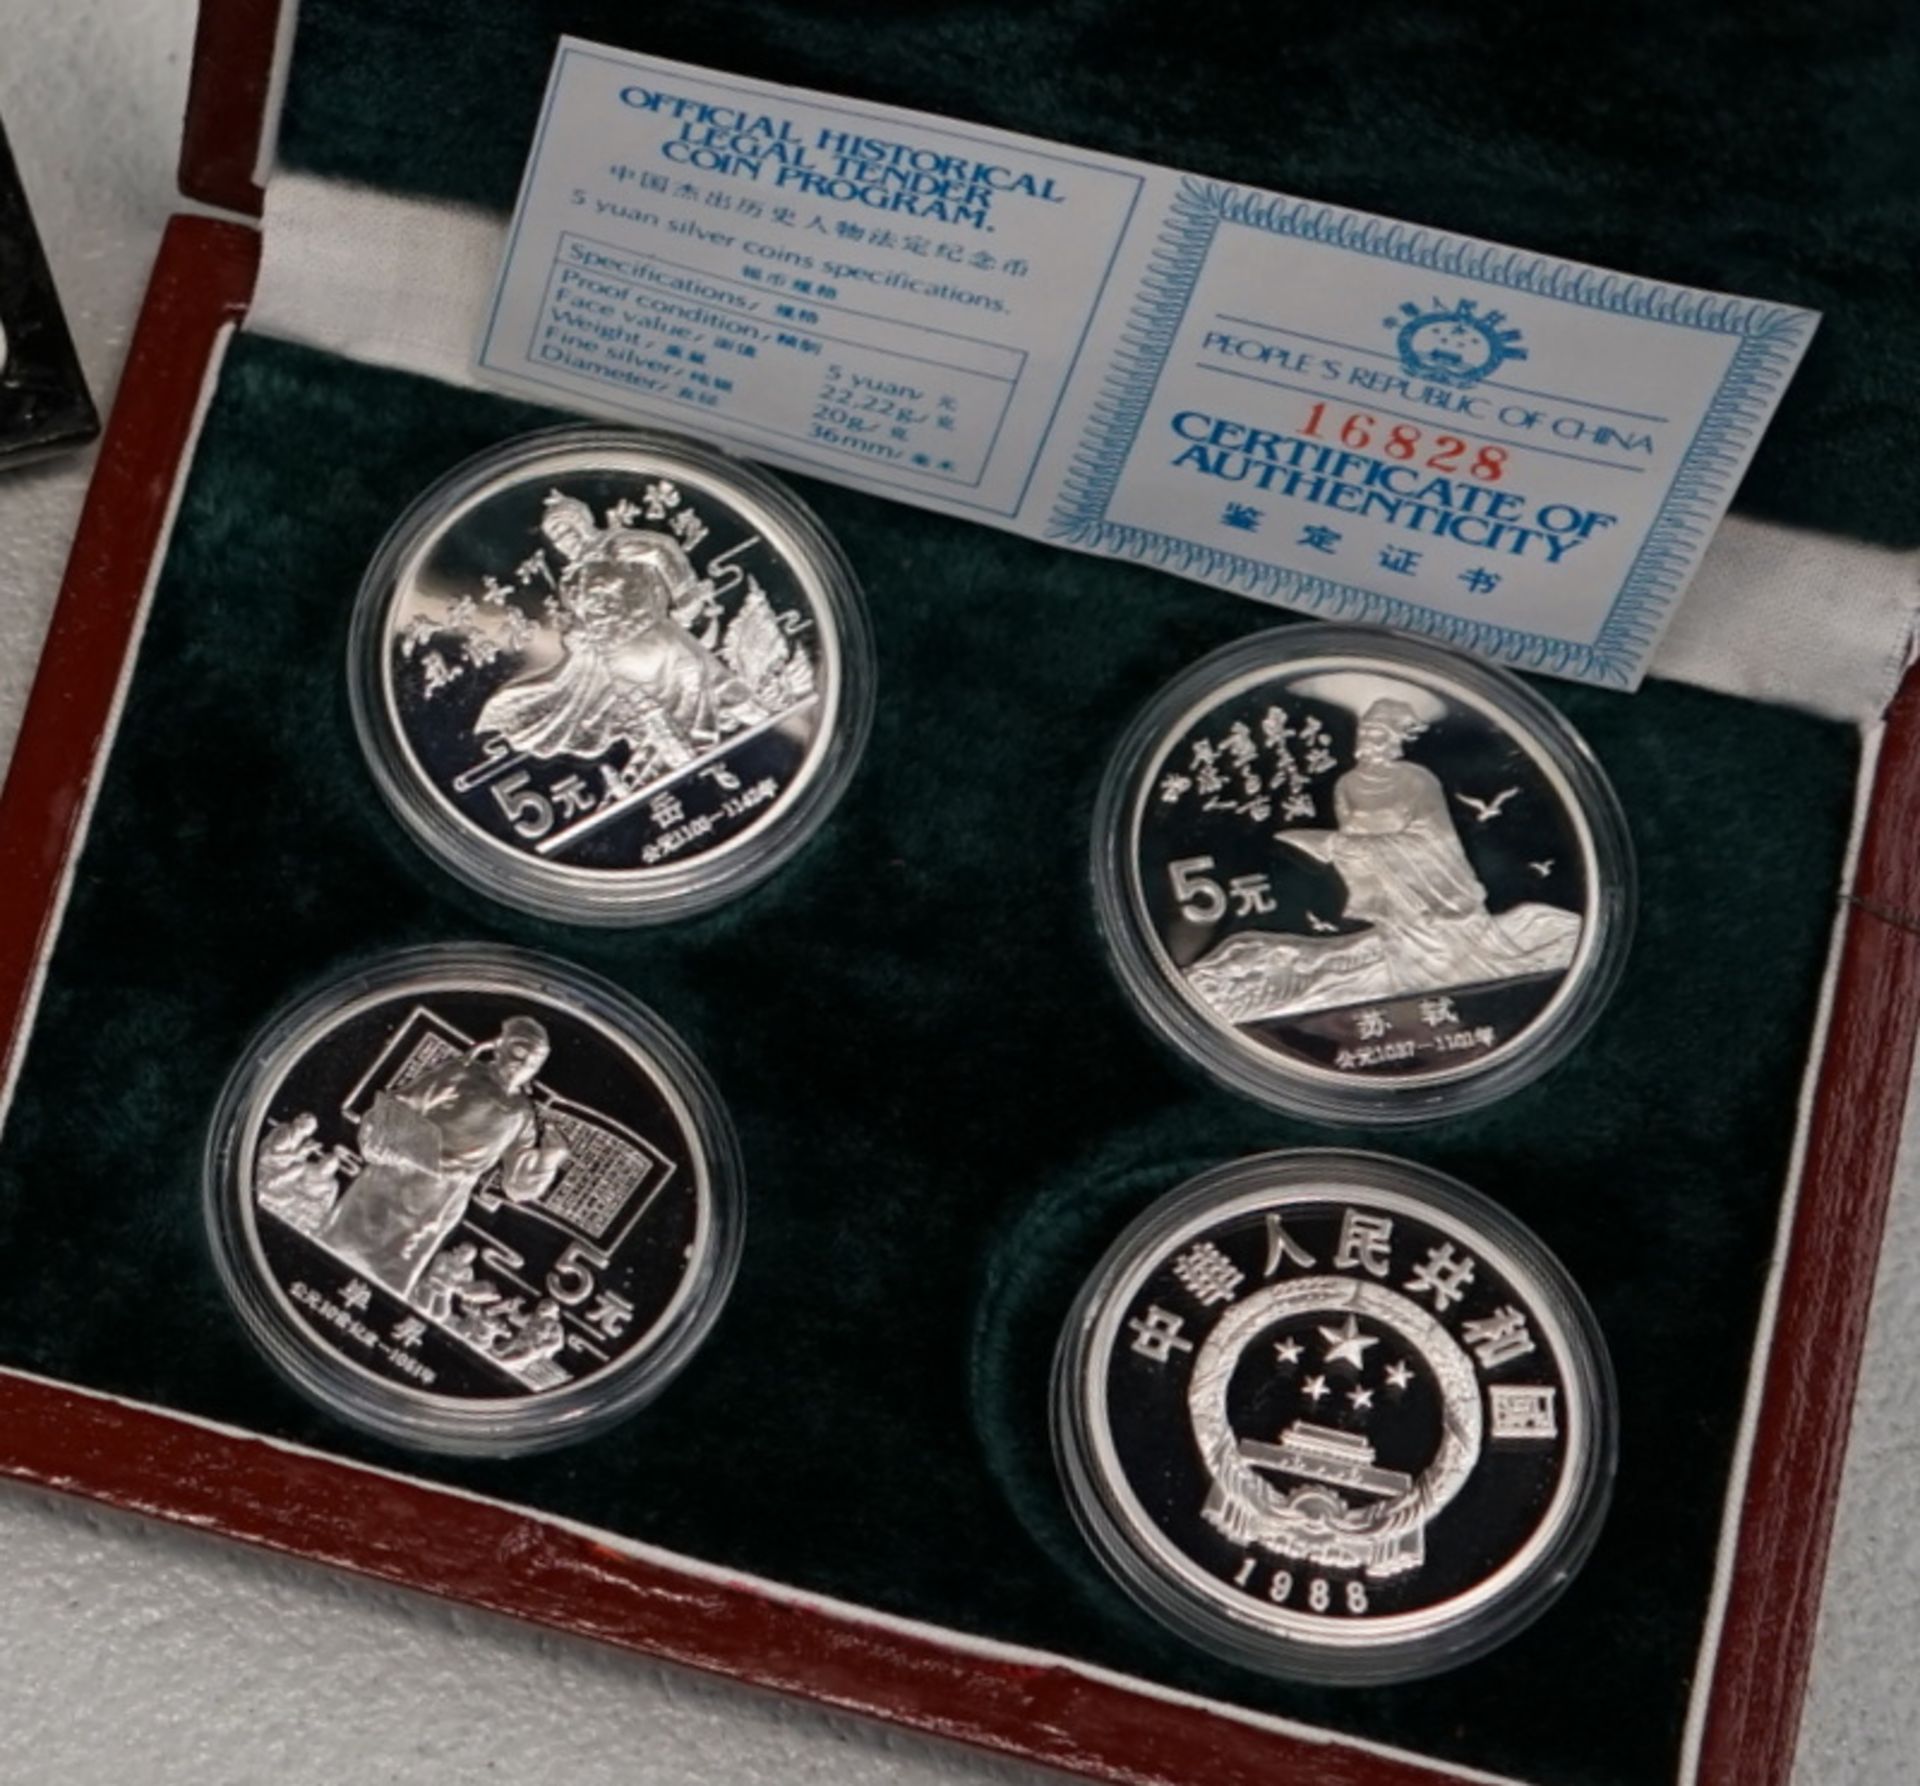 12 Münzen, Silber, China, 5 Yuan, 1986, 1987, 1988,jeweils 4x 1986,1987, 1988, 5 Yuan, Durchmesser - Bild 3 aus 3